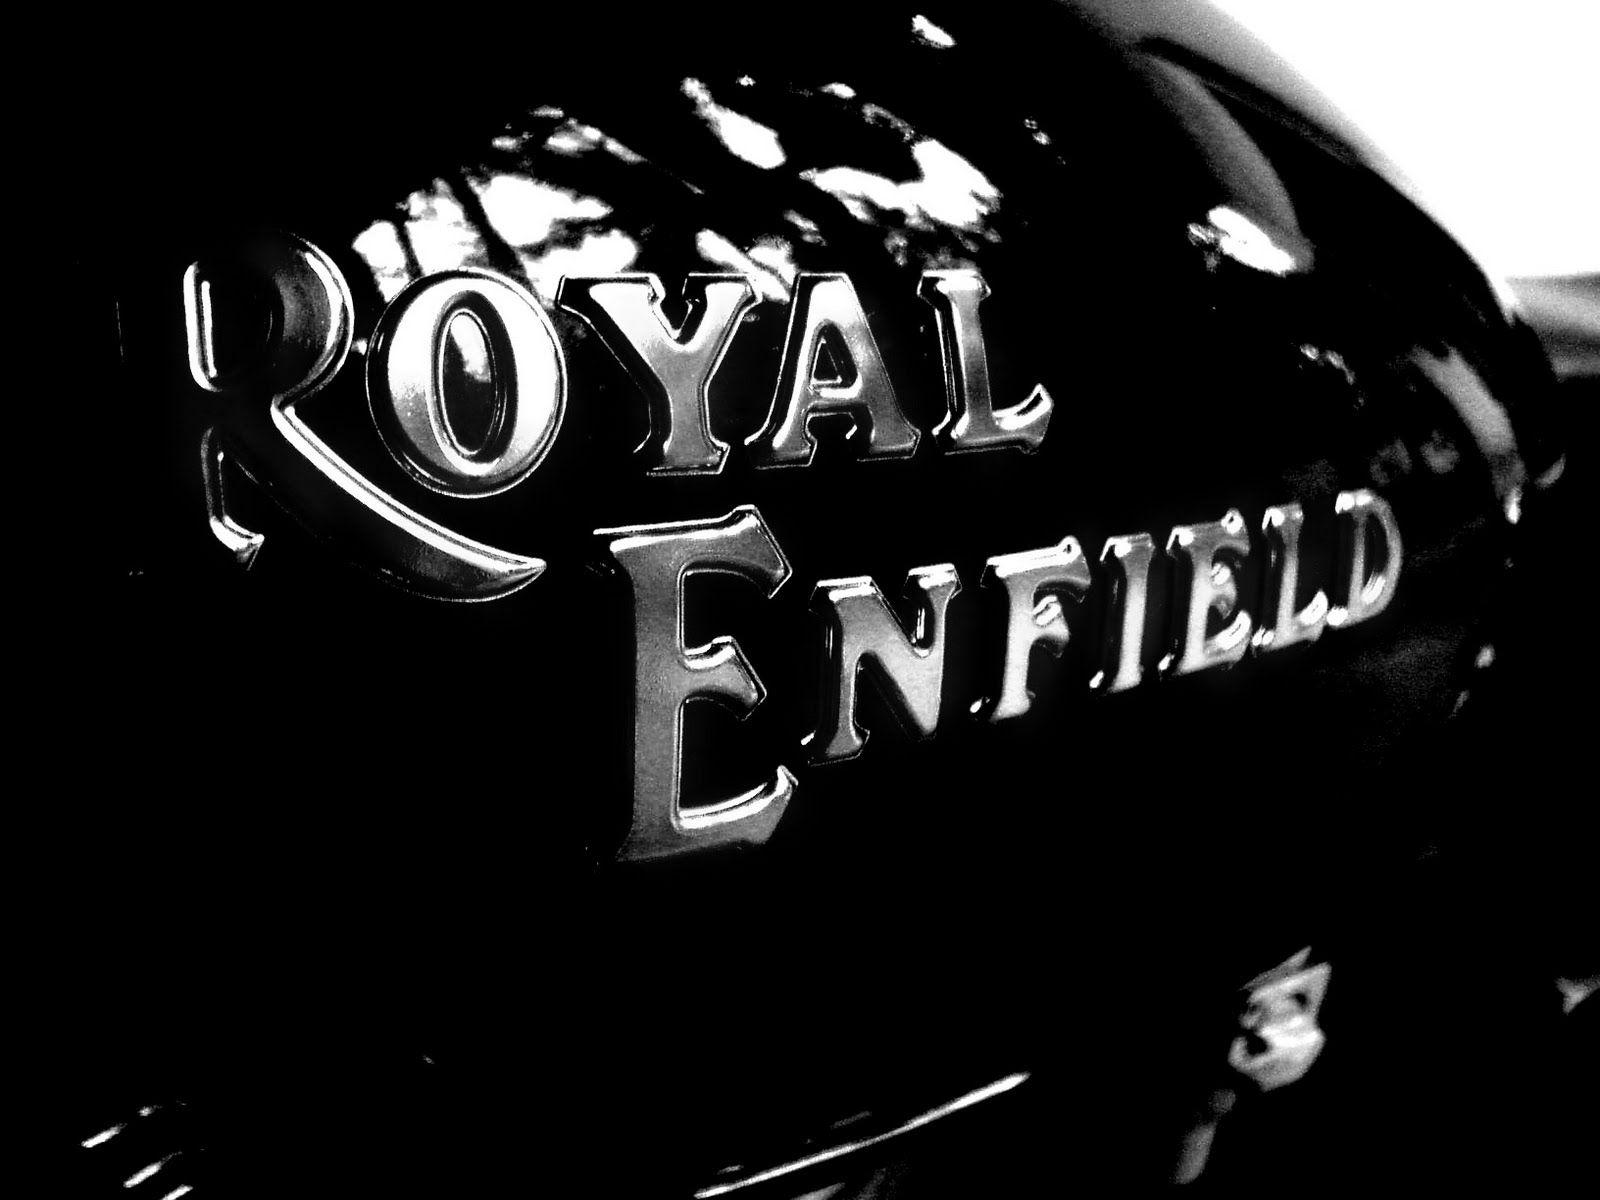 Royal Enfield Wallpaper, Magnificent Image of Royal Enfield 4K